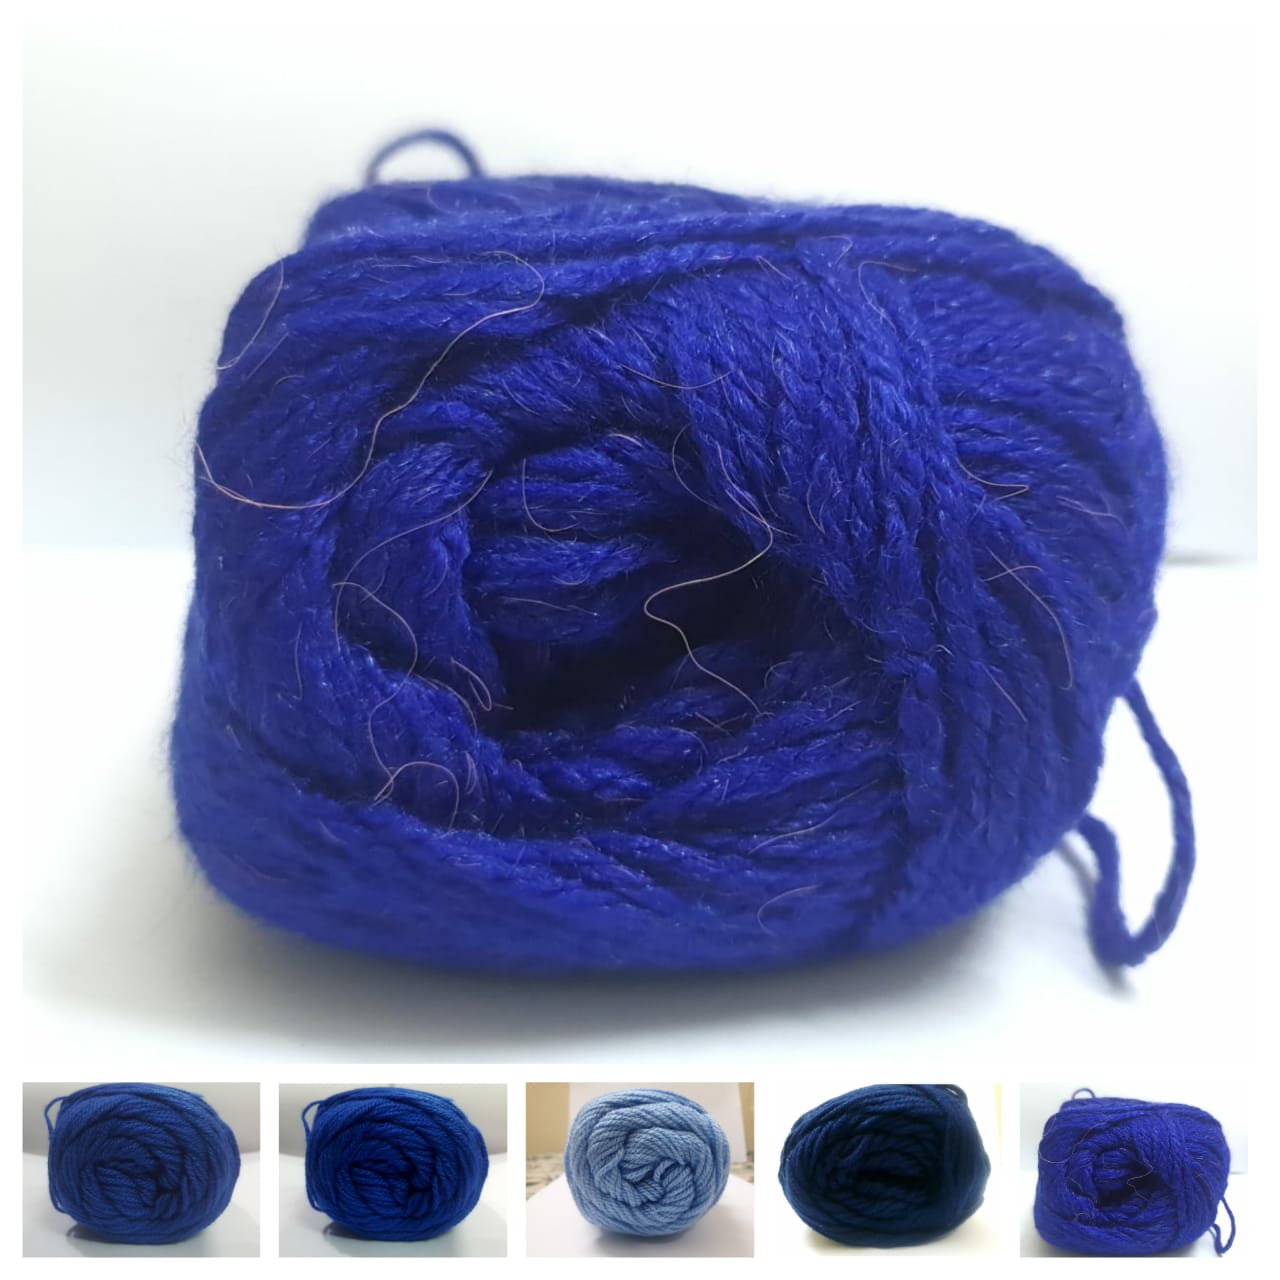 1 Pc, High Quality, Wool Ball. Sweater, Soft Wool Blue Shades